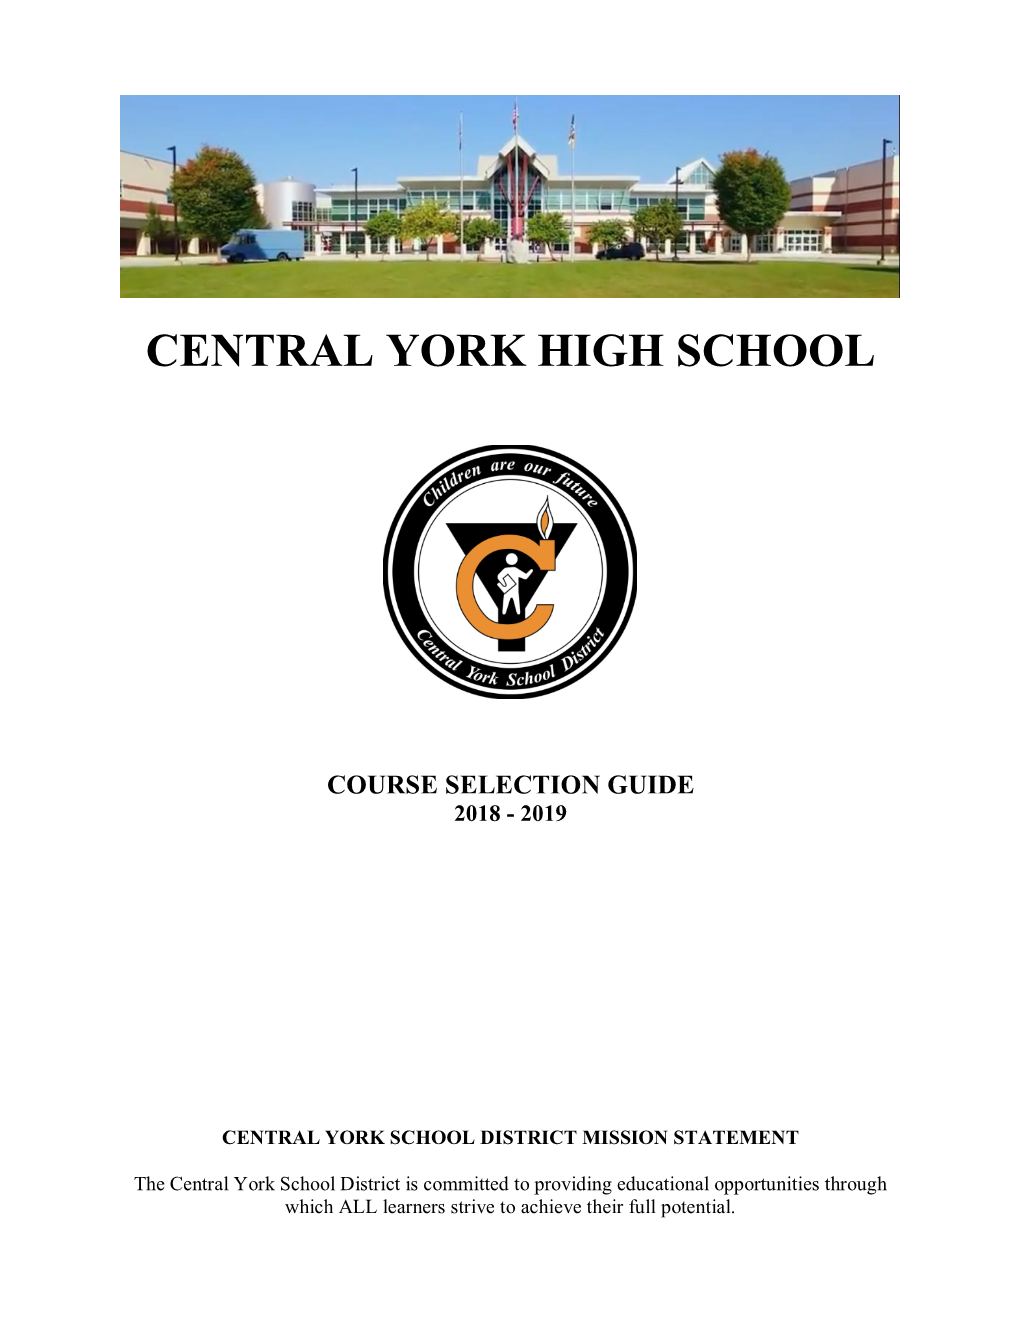 Central York High School Course Selection Guide